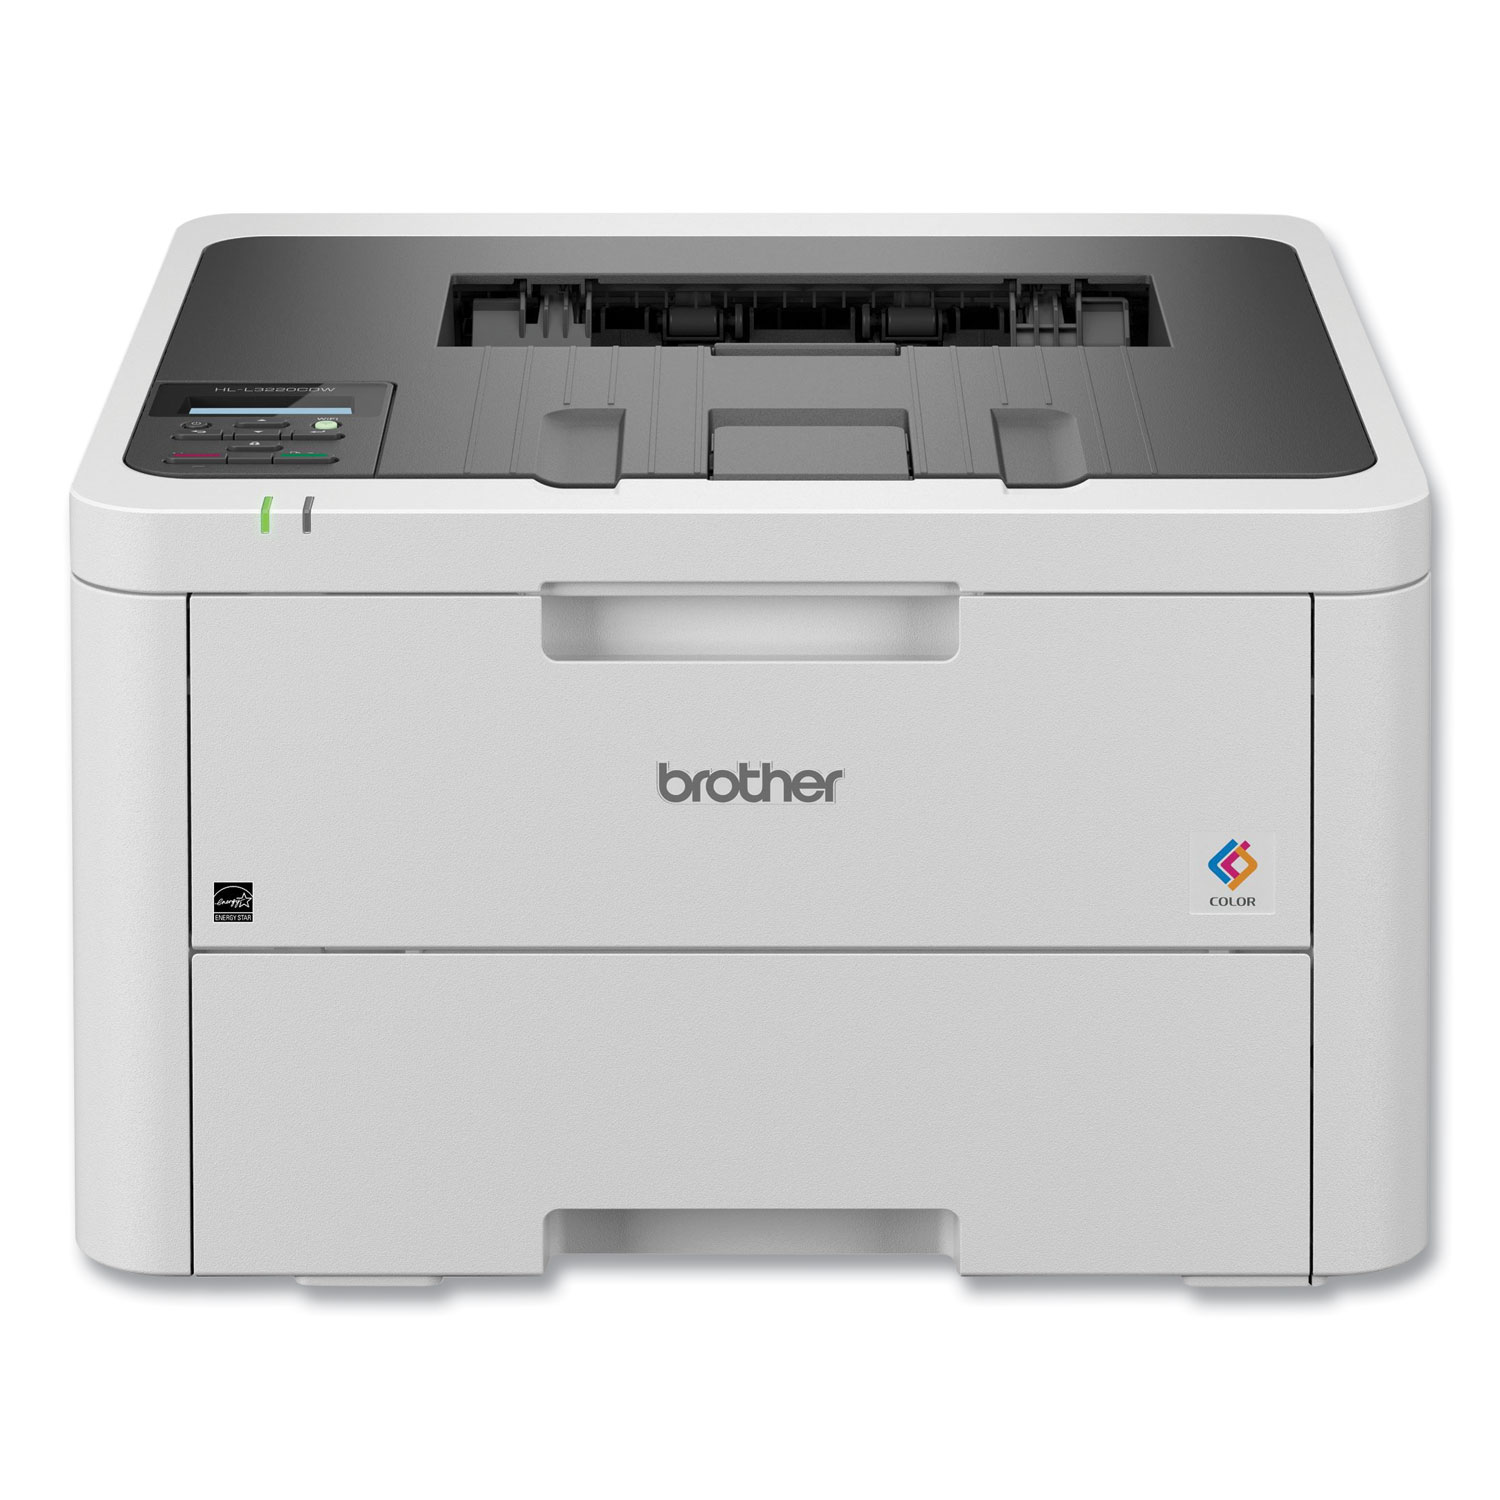 Brother HL-L2350DW Compact Black & White Laser Printer